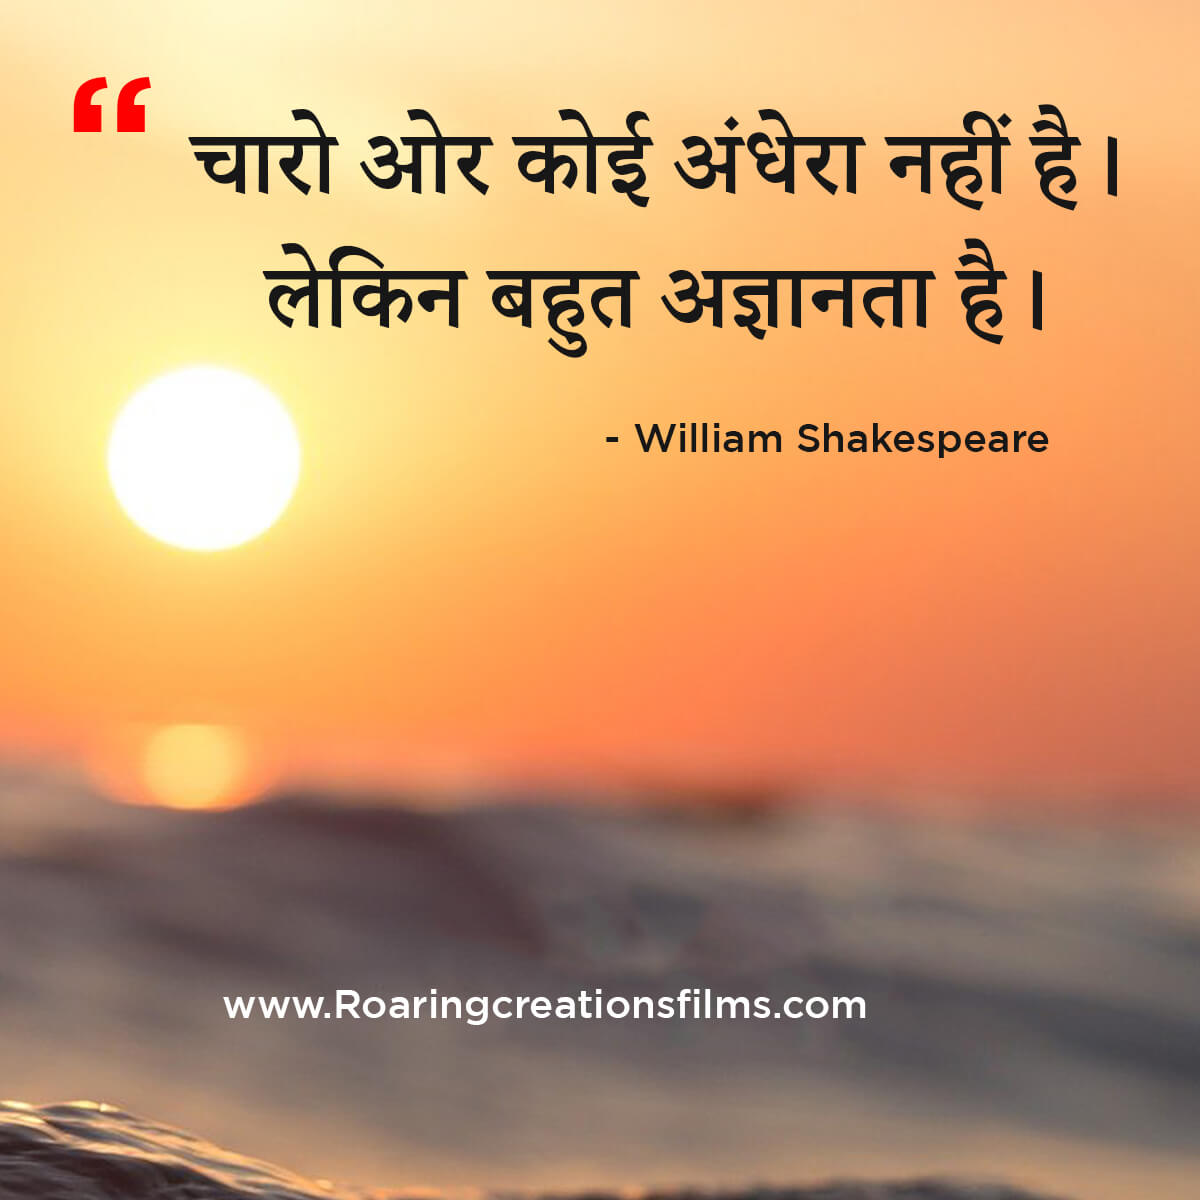 Best Quotes of William Shakespeare in Hindi